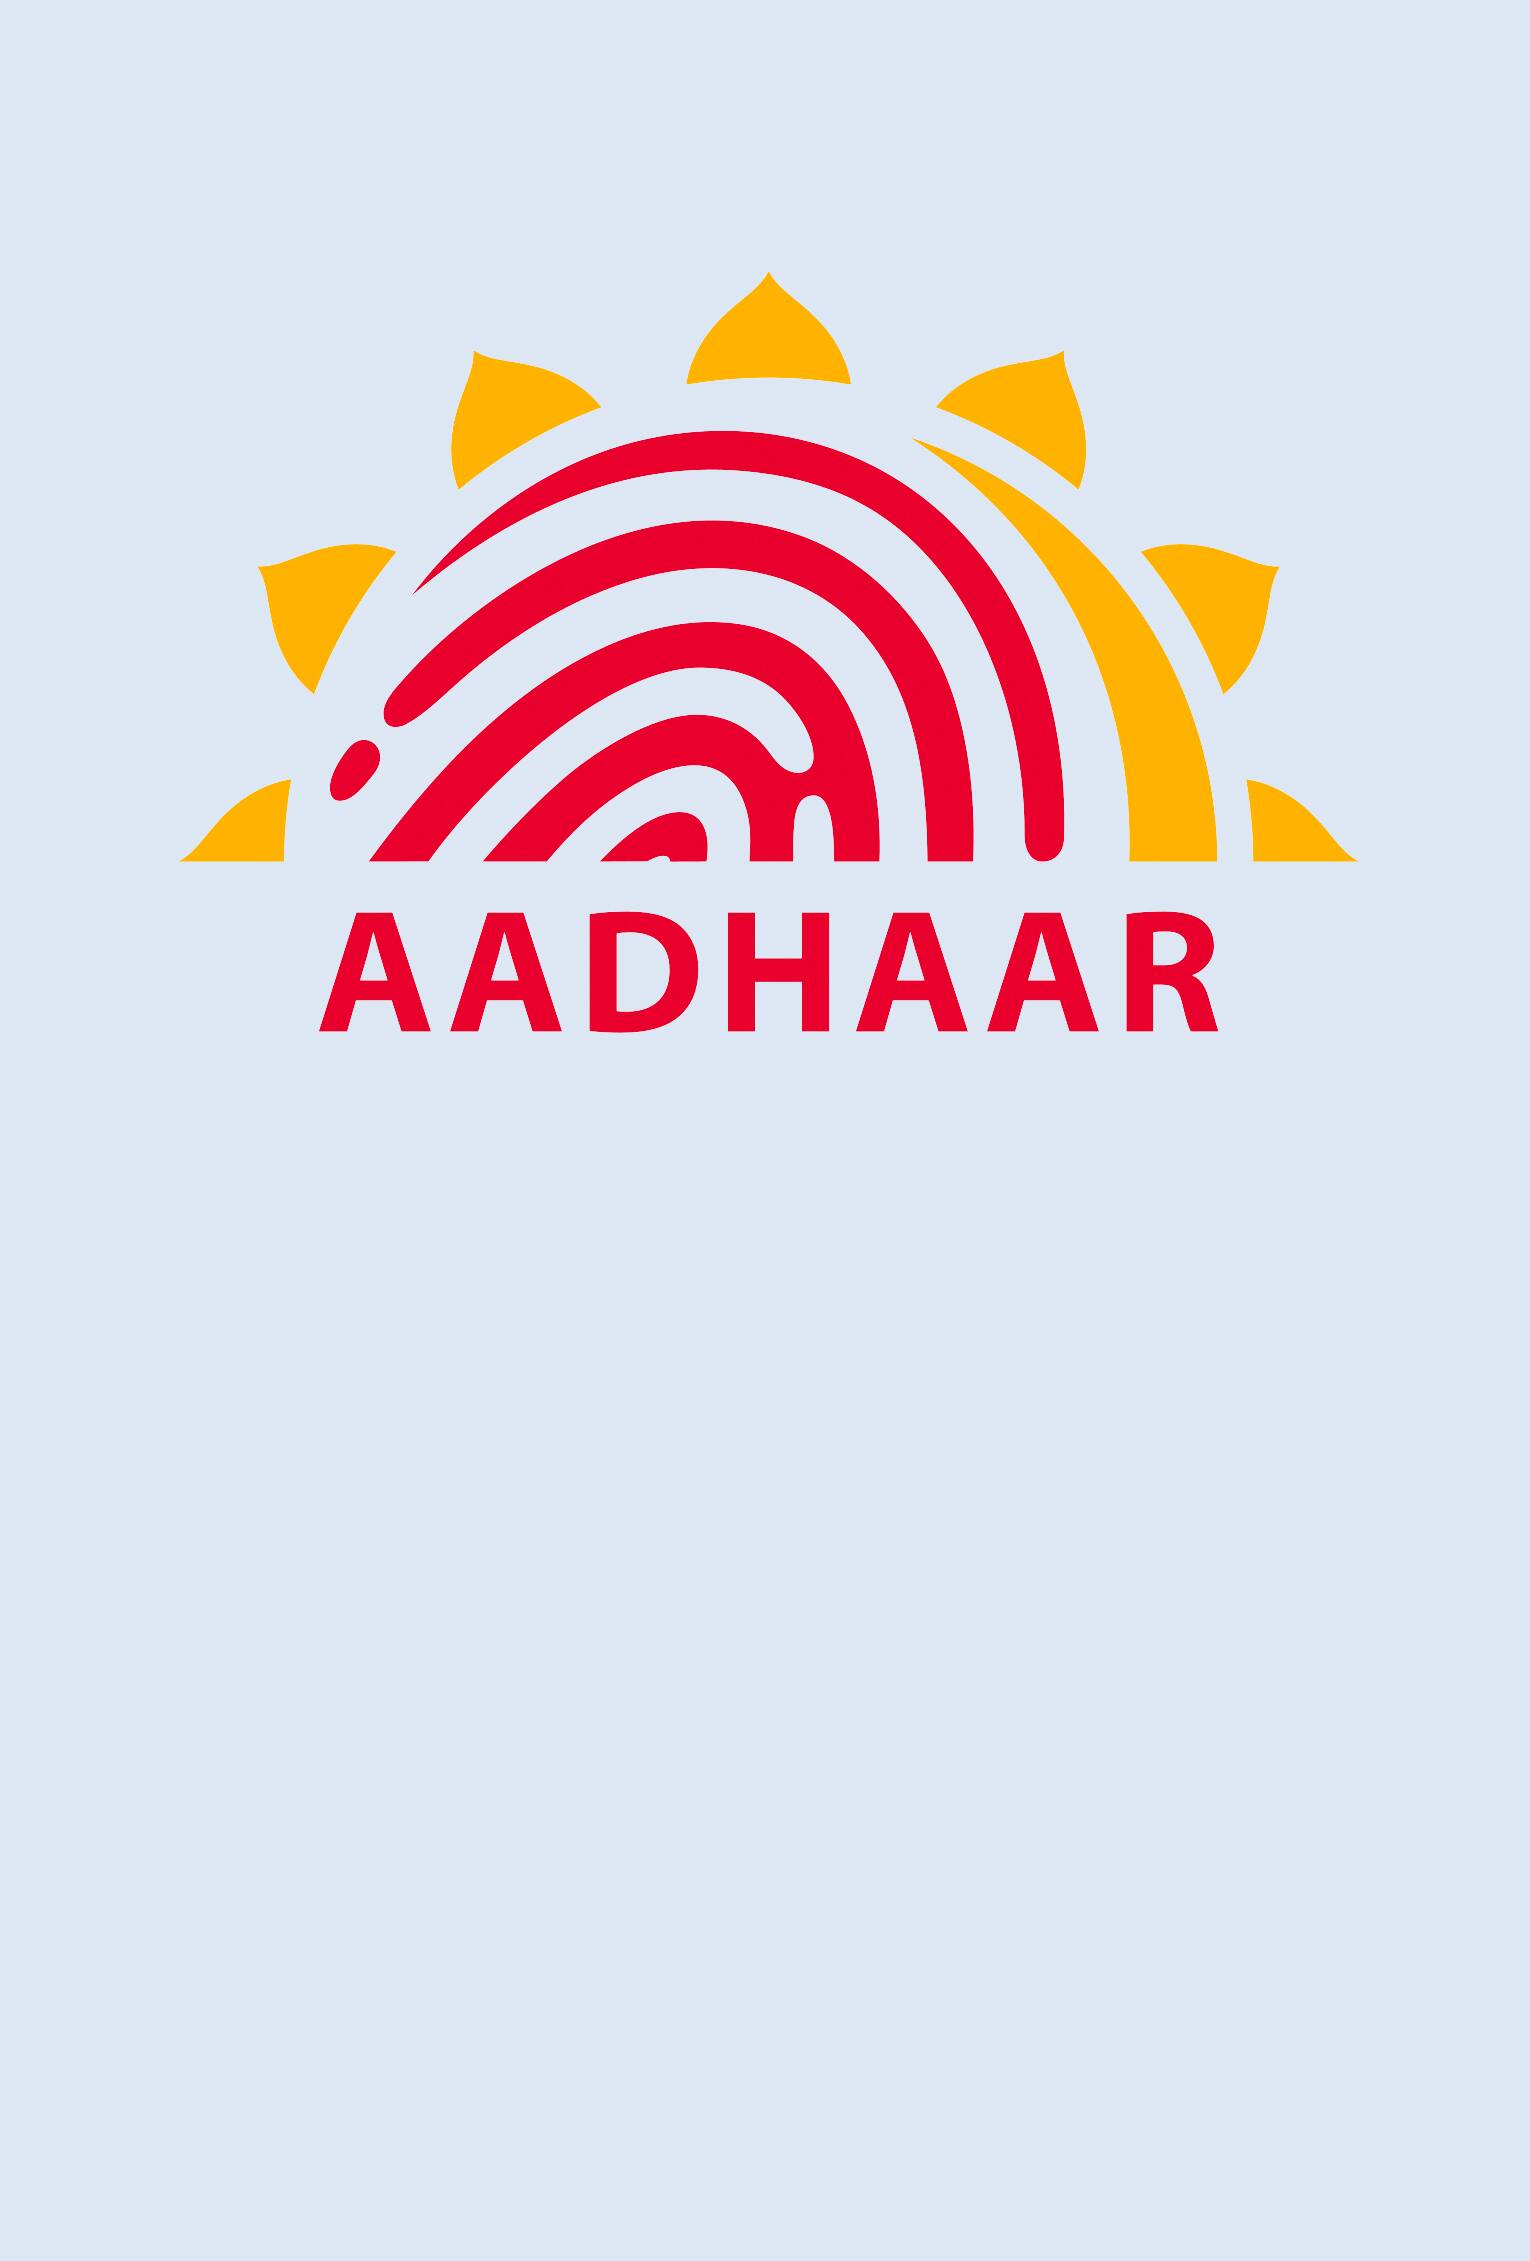 Mobile Logo png download - 501*501 - Free Transparent Aadhaar png Download.  - CleanPNG / KissPNG